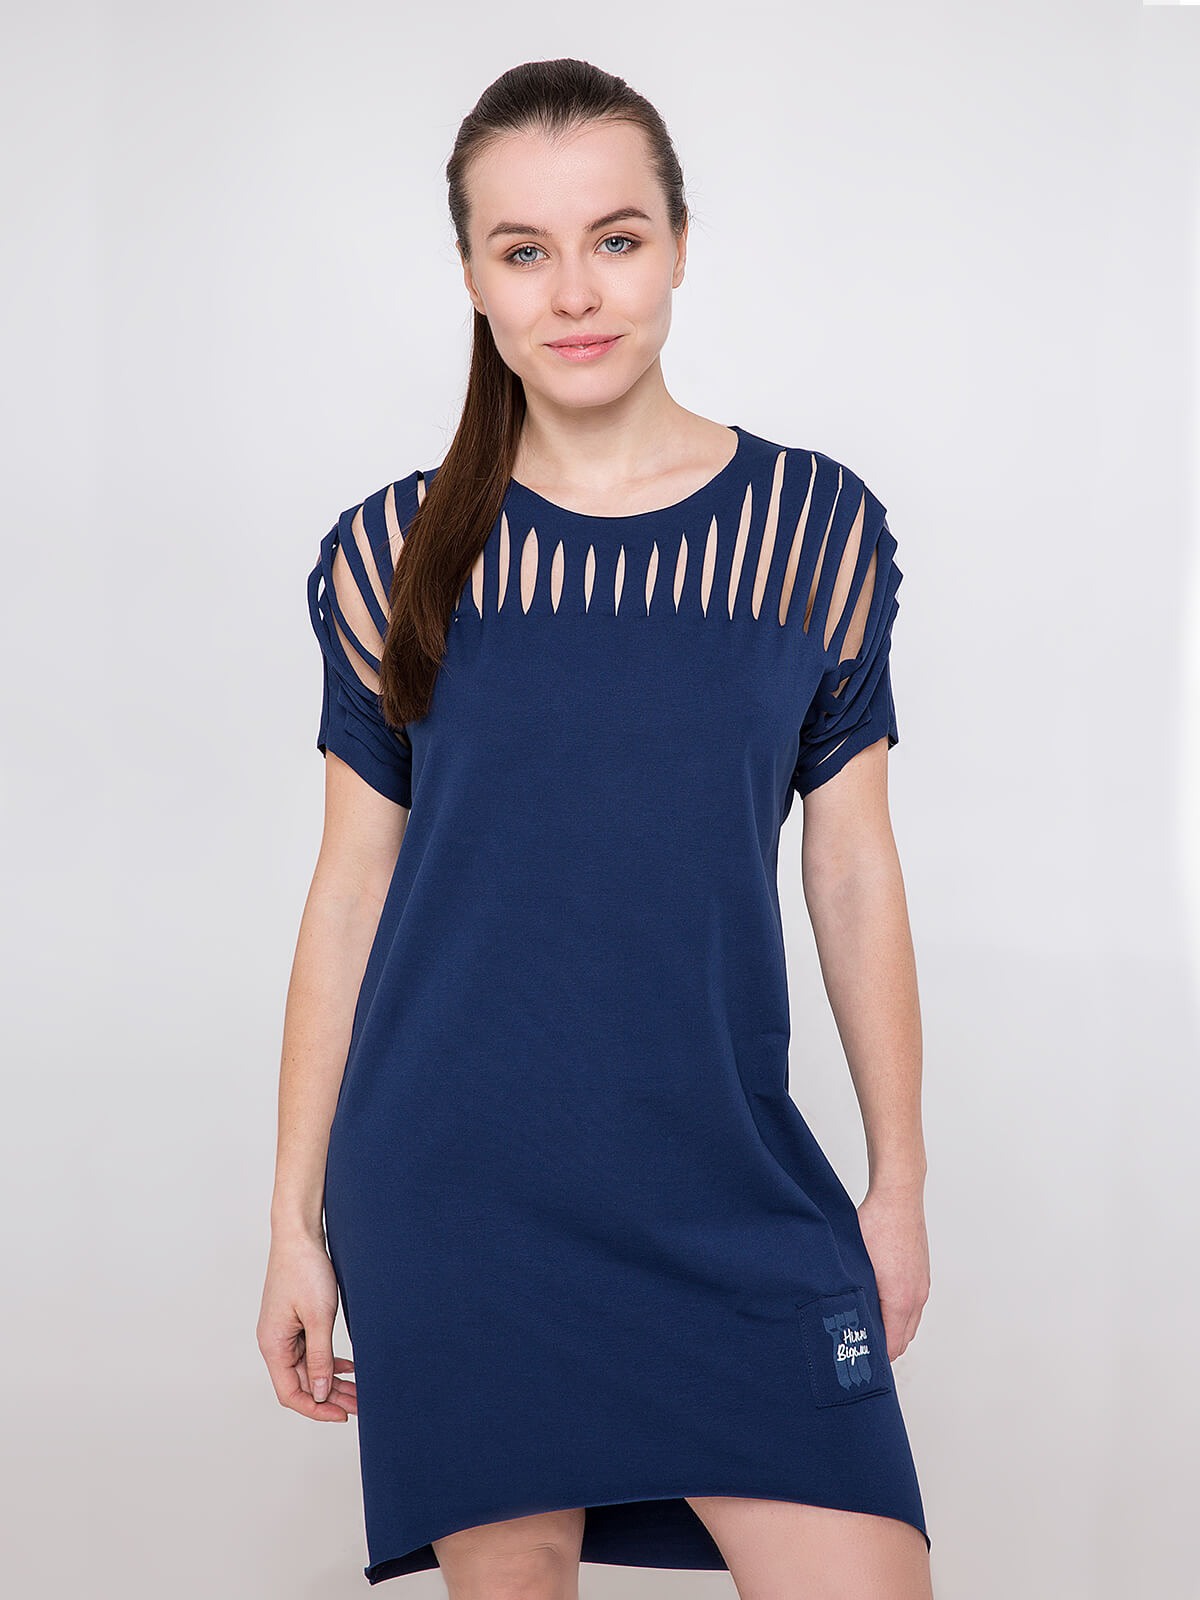 Women's Dress Hannusia. Color navy blue. .